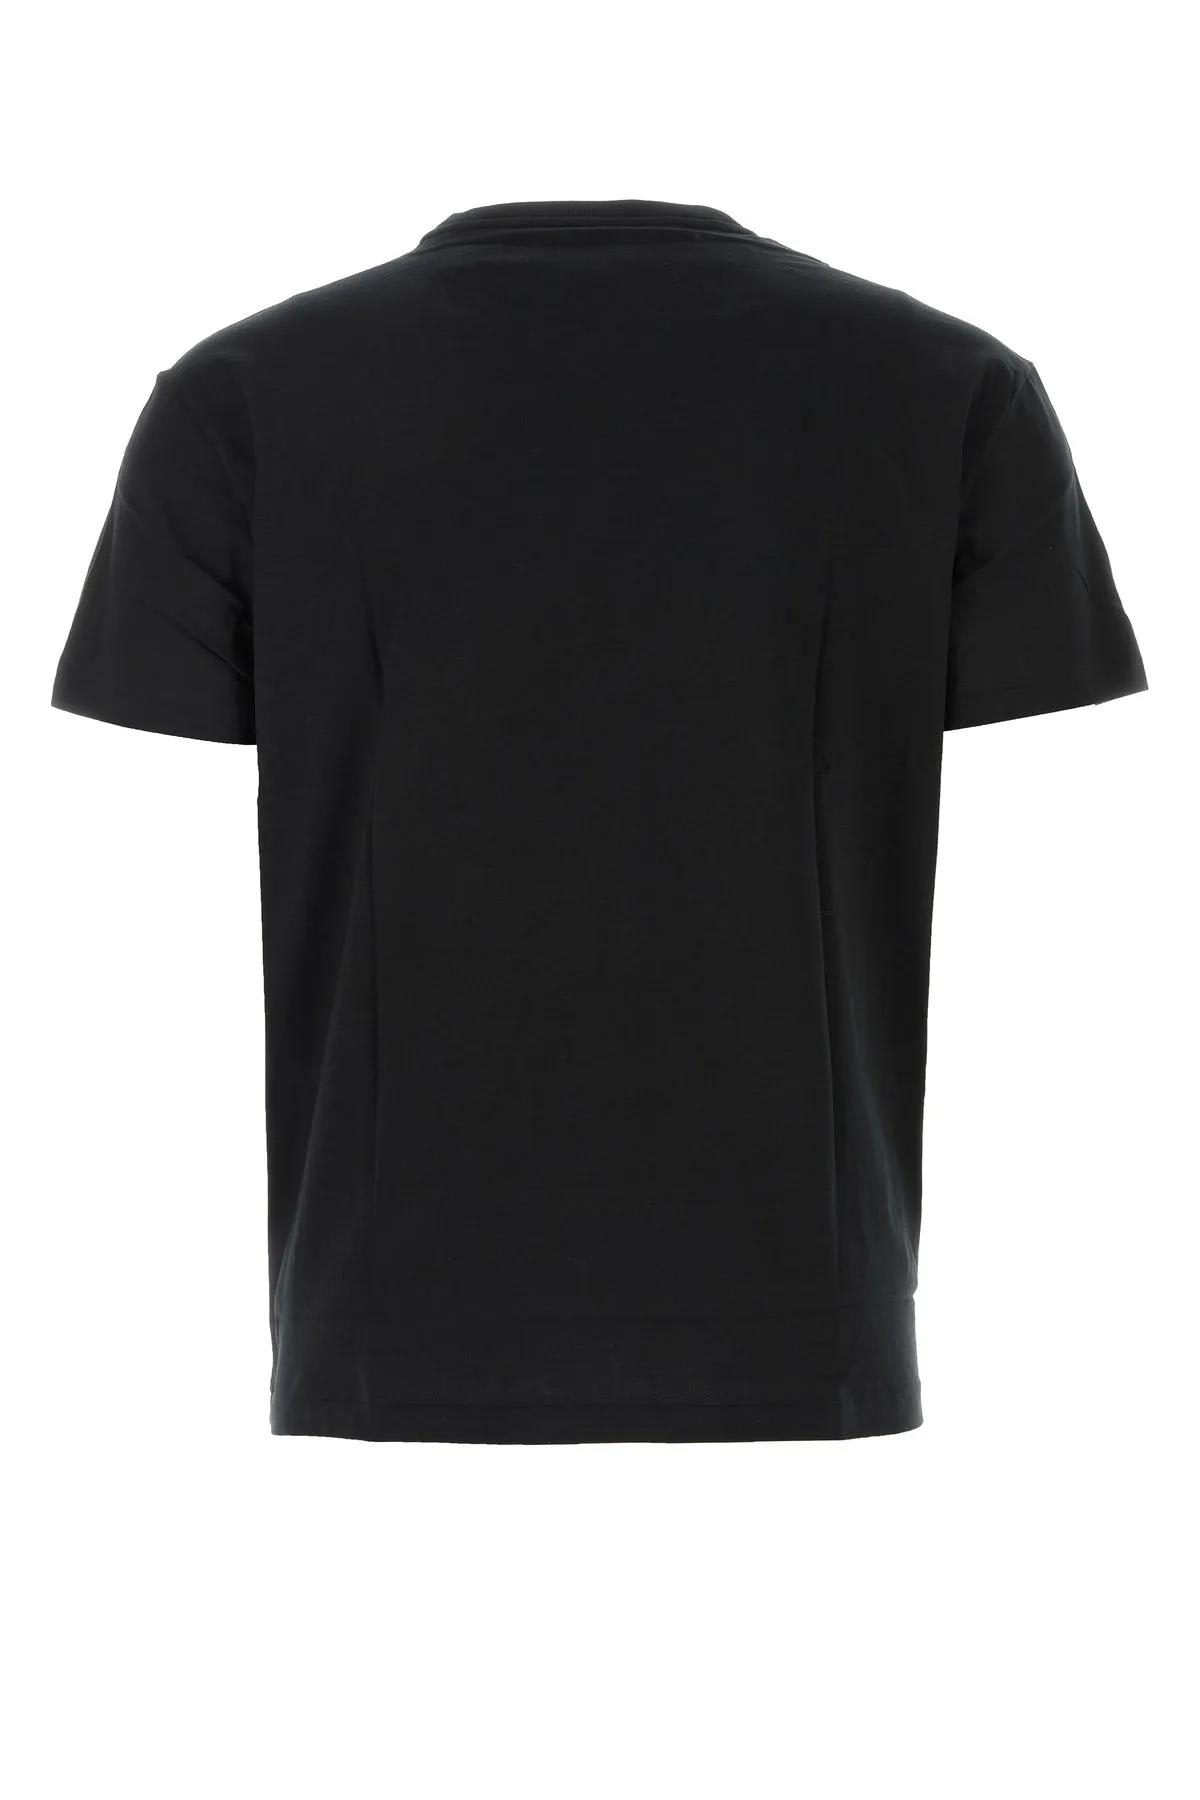 Shop Ralph Lauren Black Cotton T-shirt